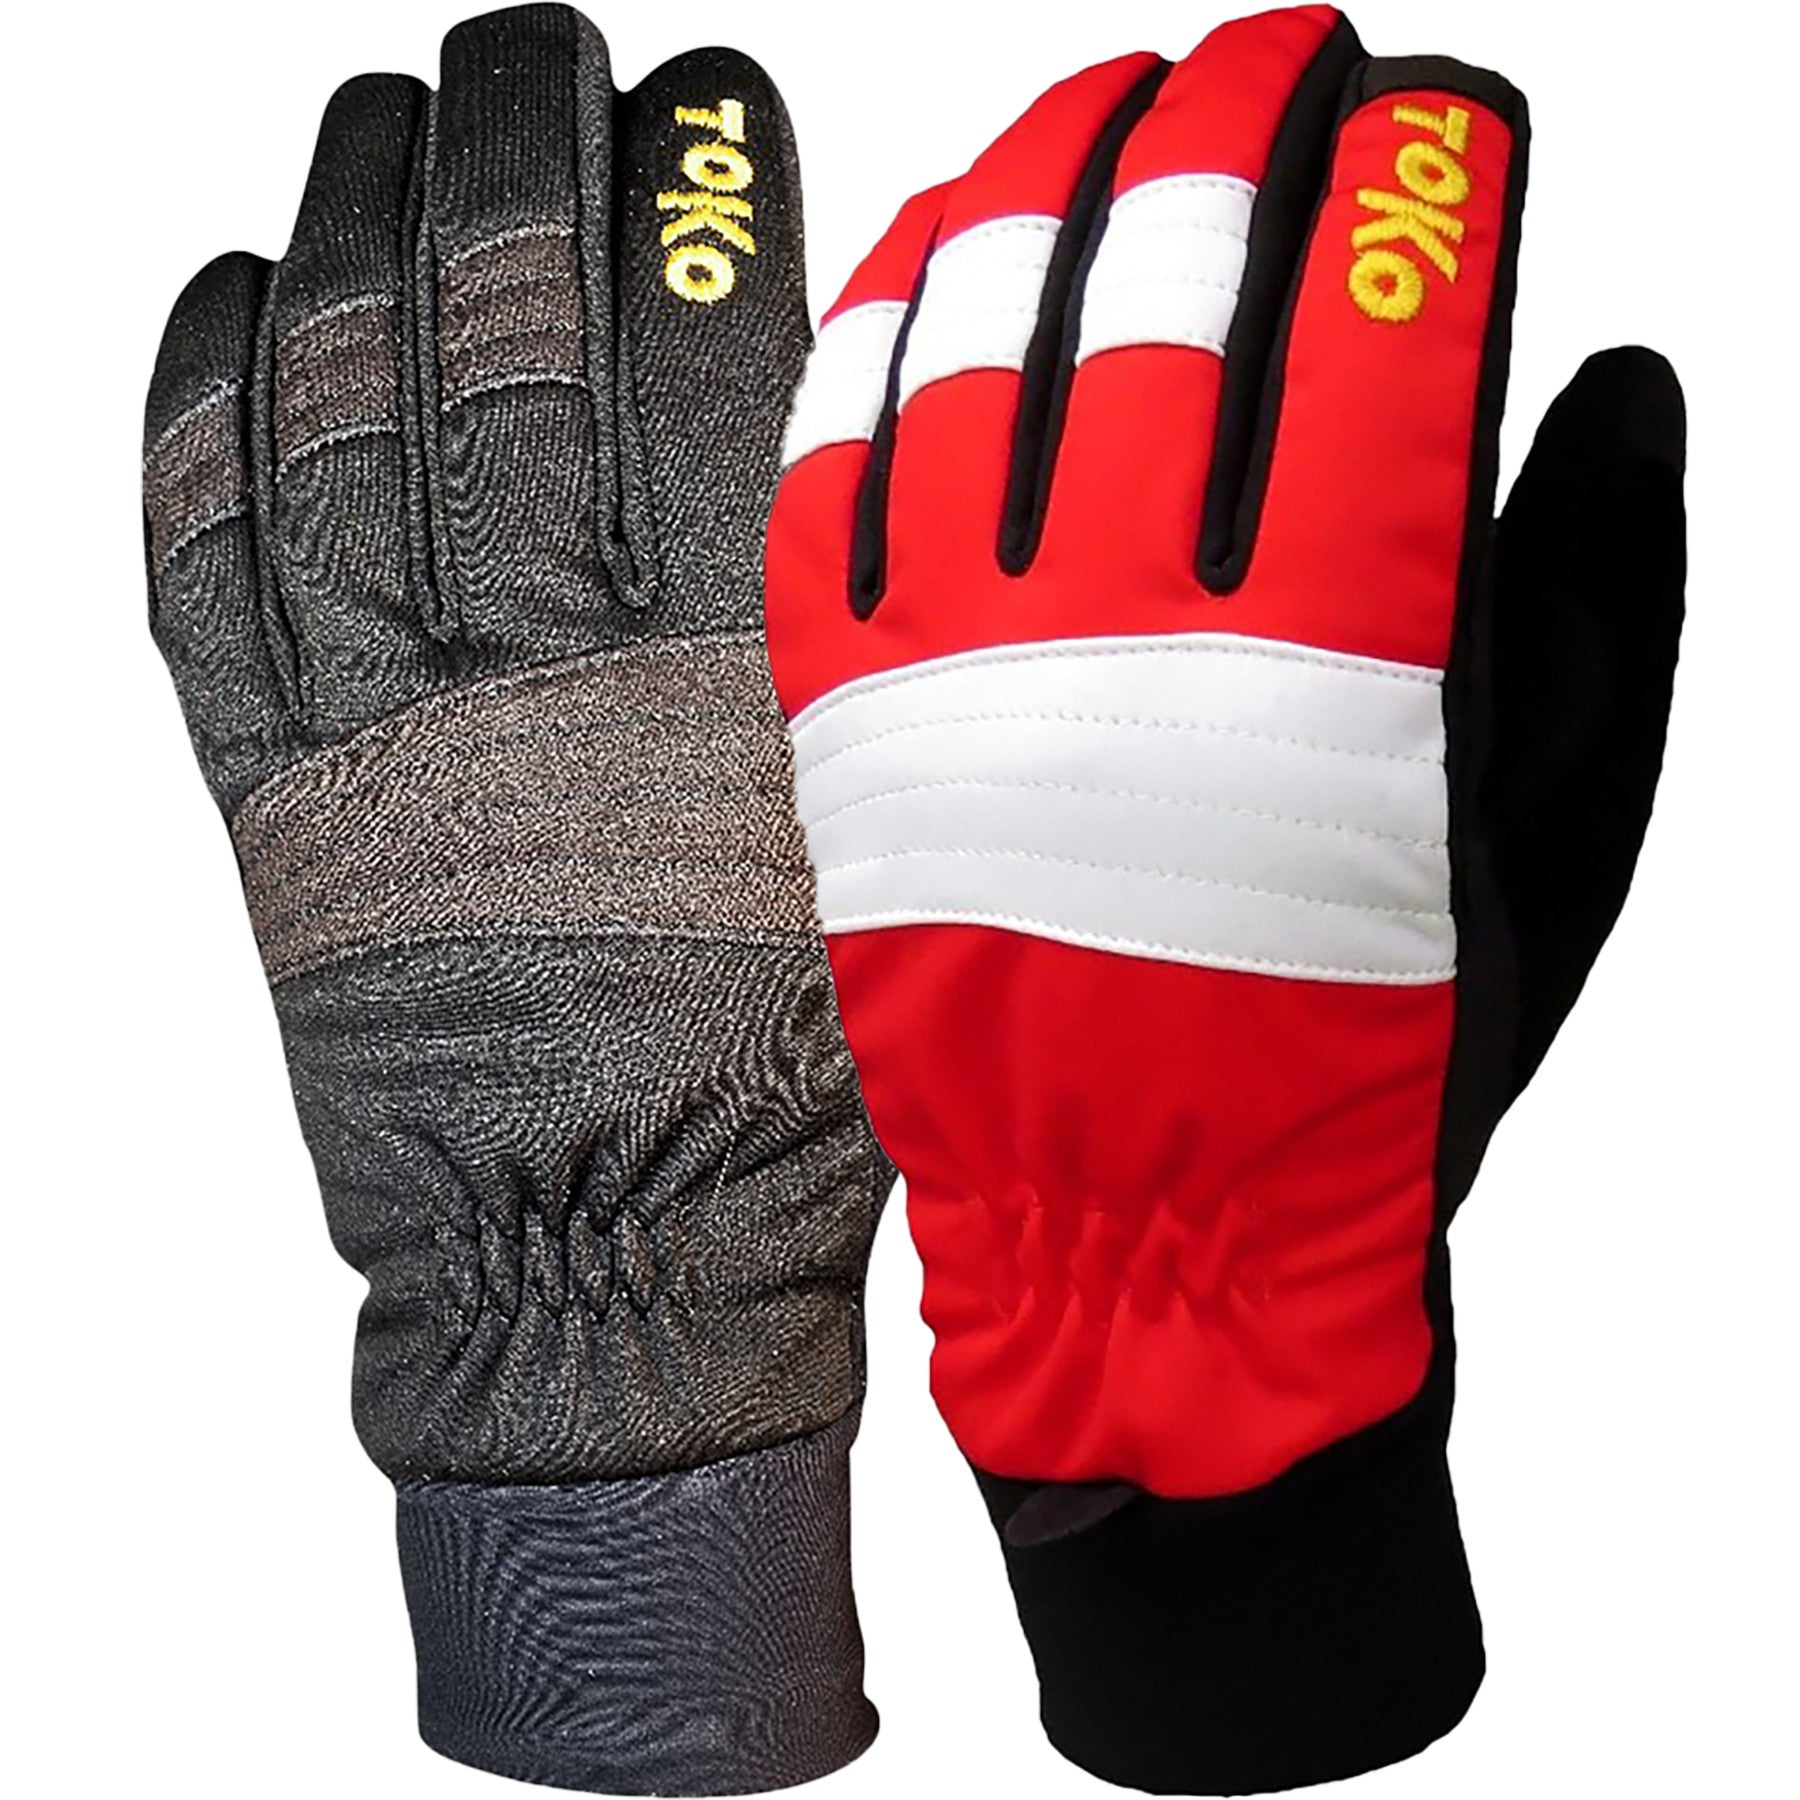 Buy red-white Toko Thermo Plus Glove